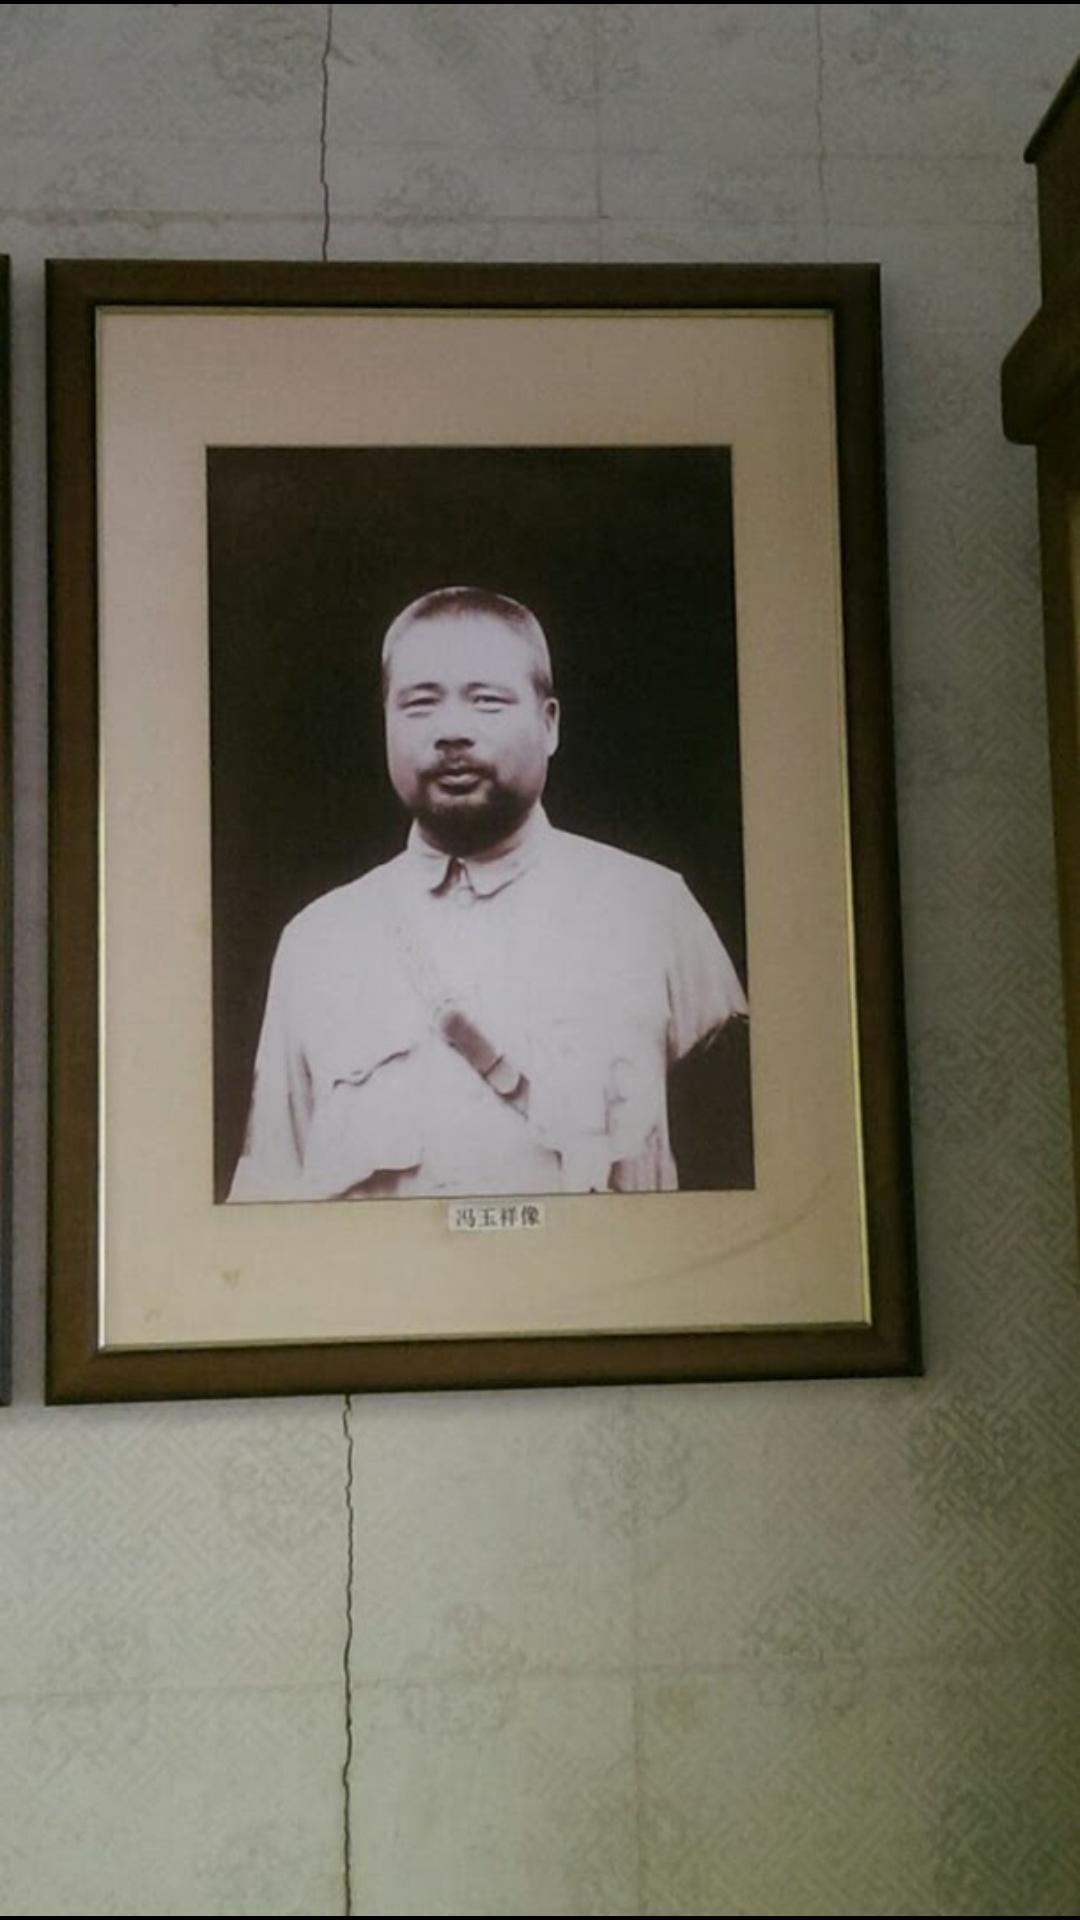 Found Asian Brad Pitt while in Beijing